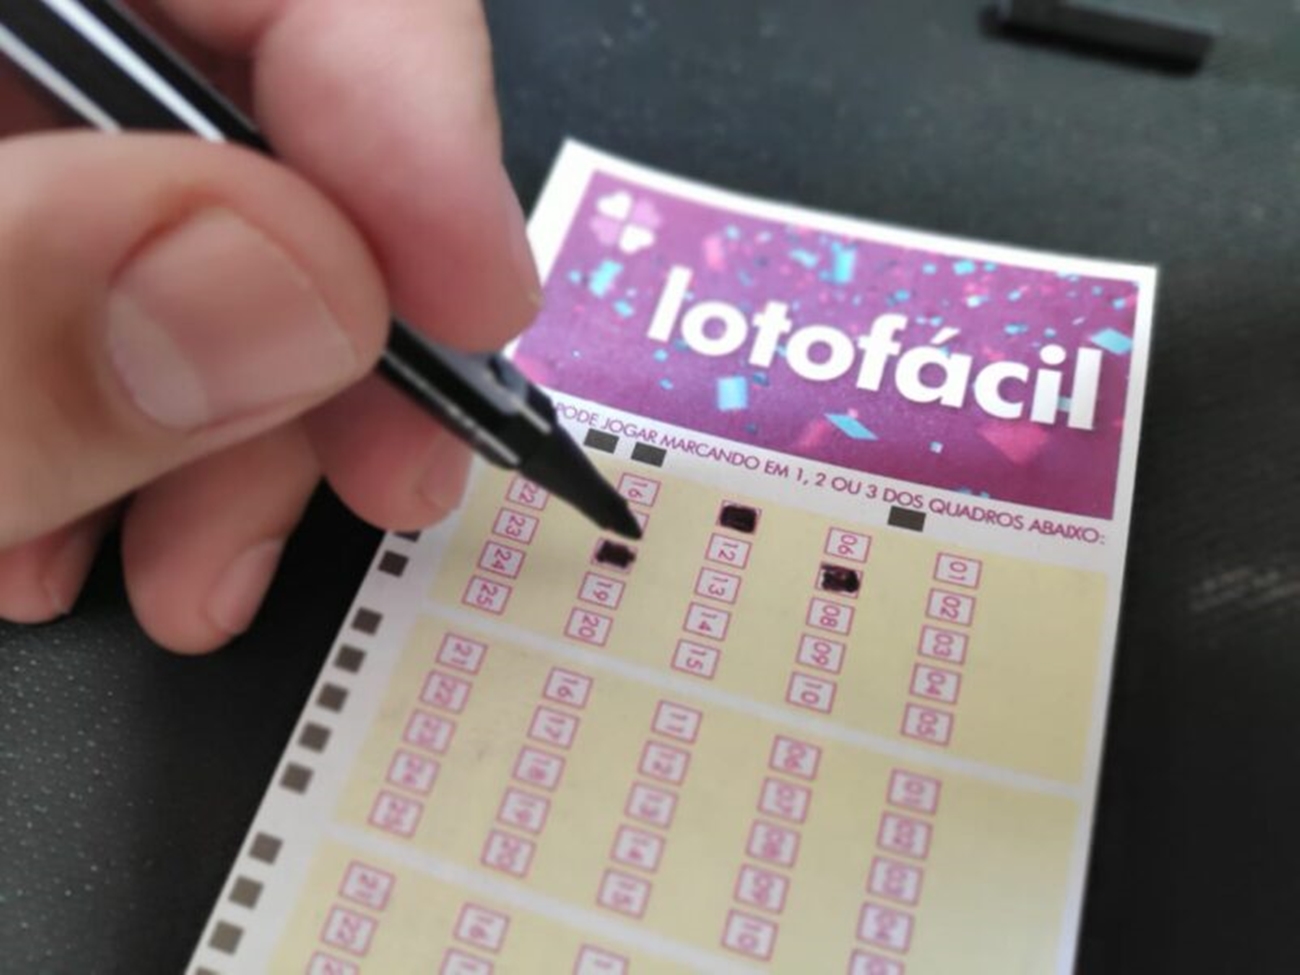 aplicativo loteria online